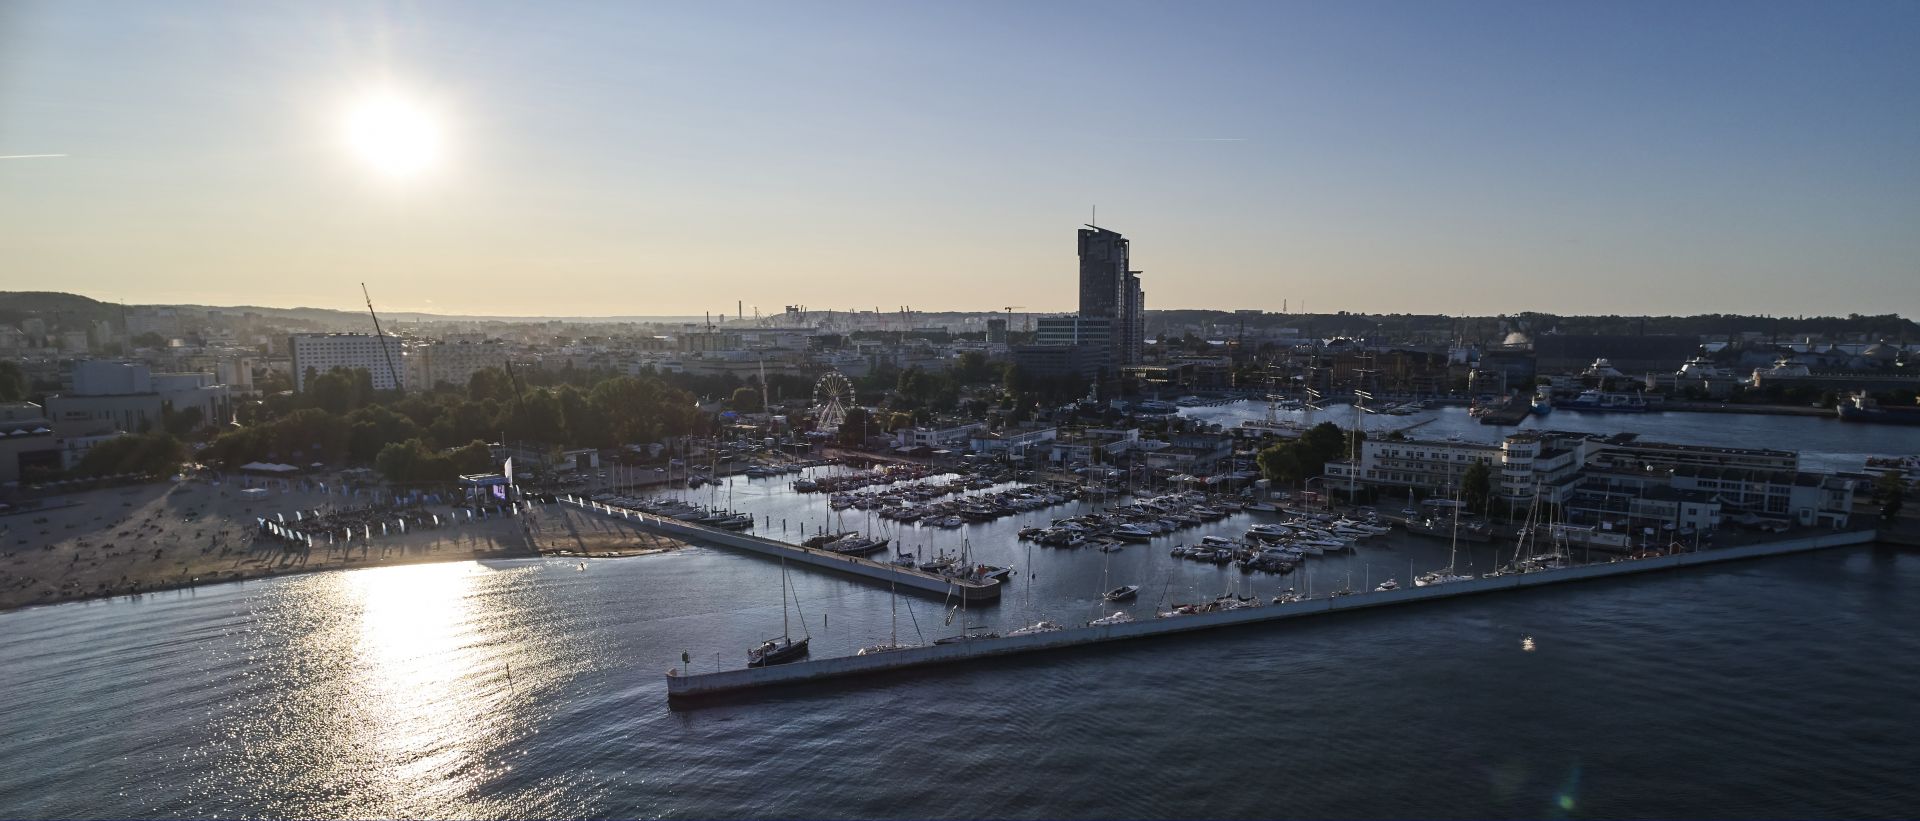 widok na marinę Gdynia z lotu ptaka, w tle słońce i Sea Towers 